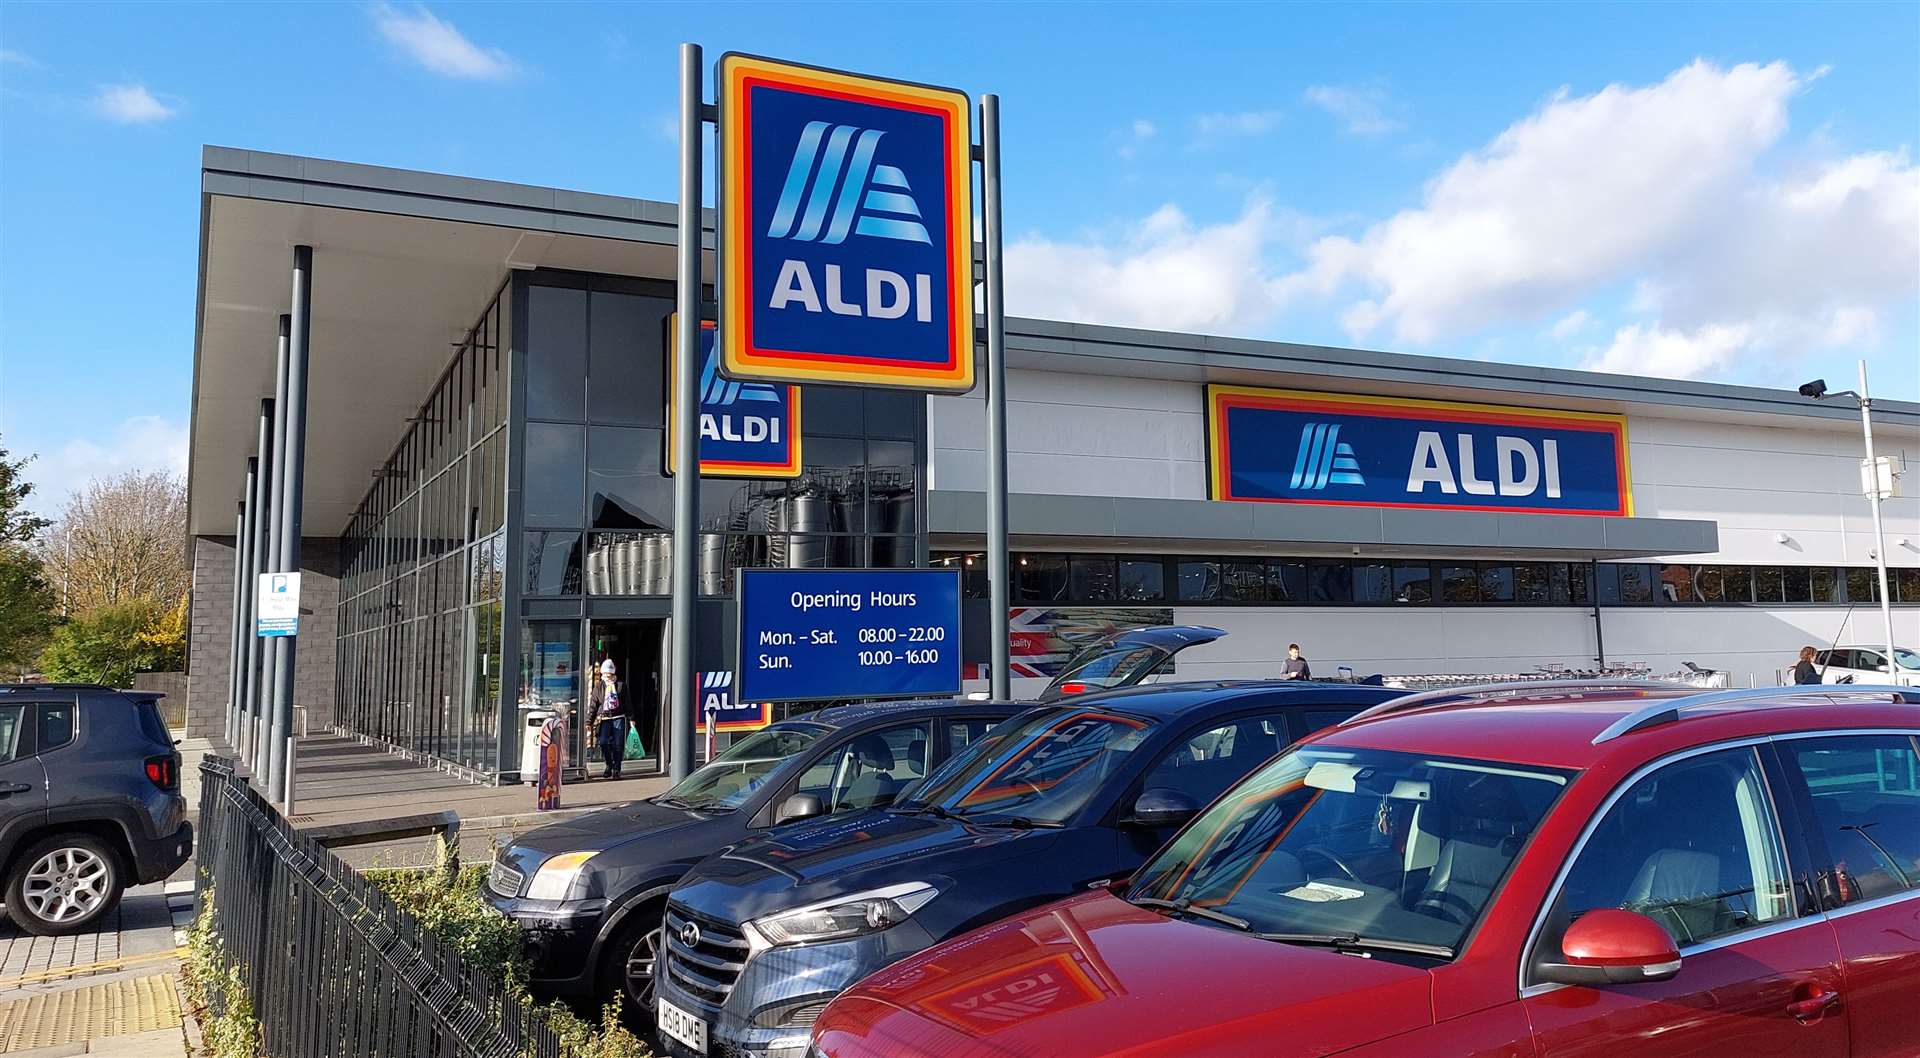 Aldi’s current Ashford supermarket opened in Victoria Road in 2018